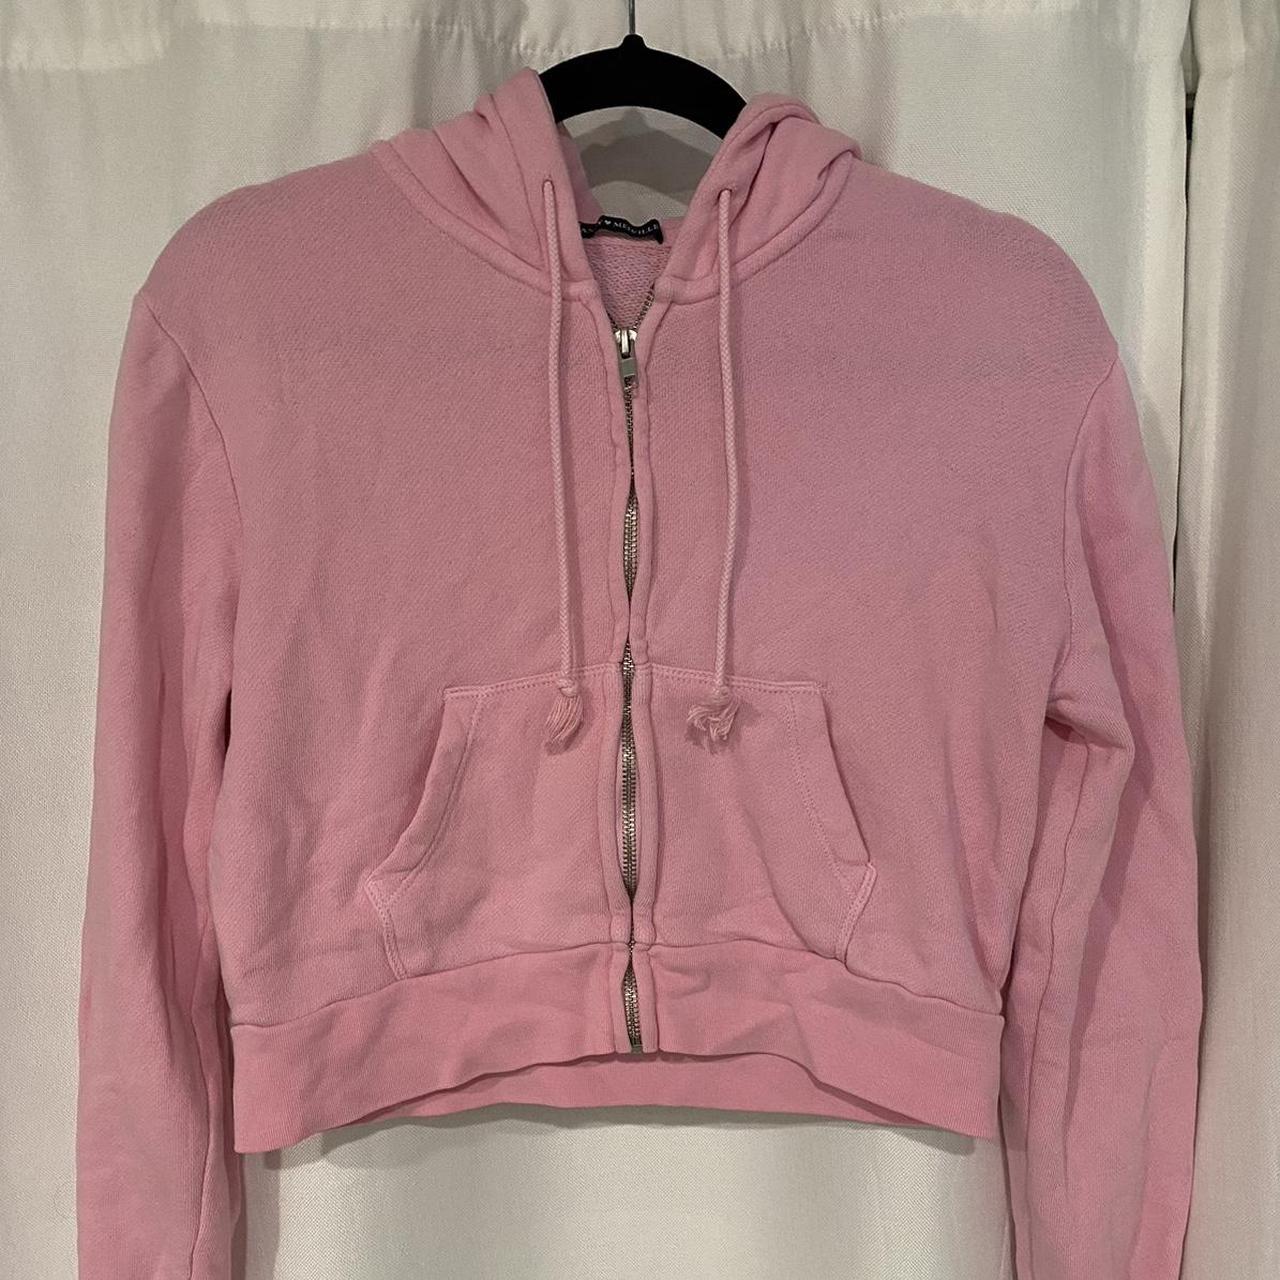 Brandy Melville Women's Pink Jacket | Depop